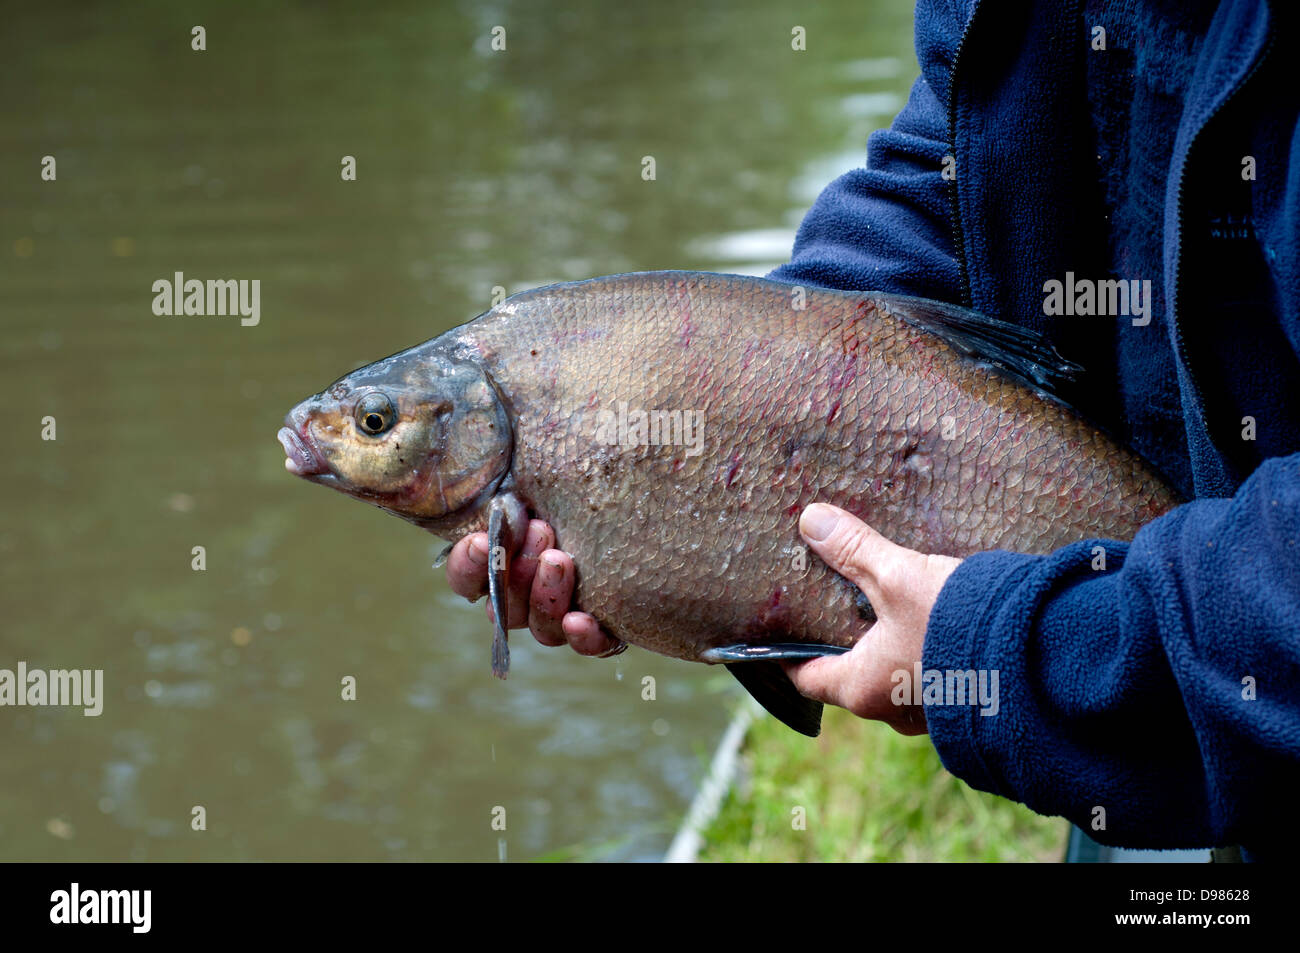 Angler holding Bream fish Stock Photo